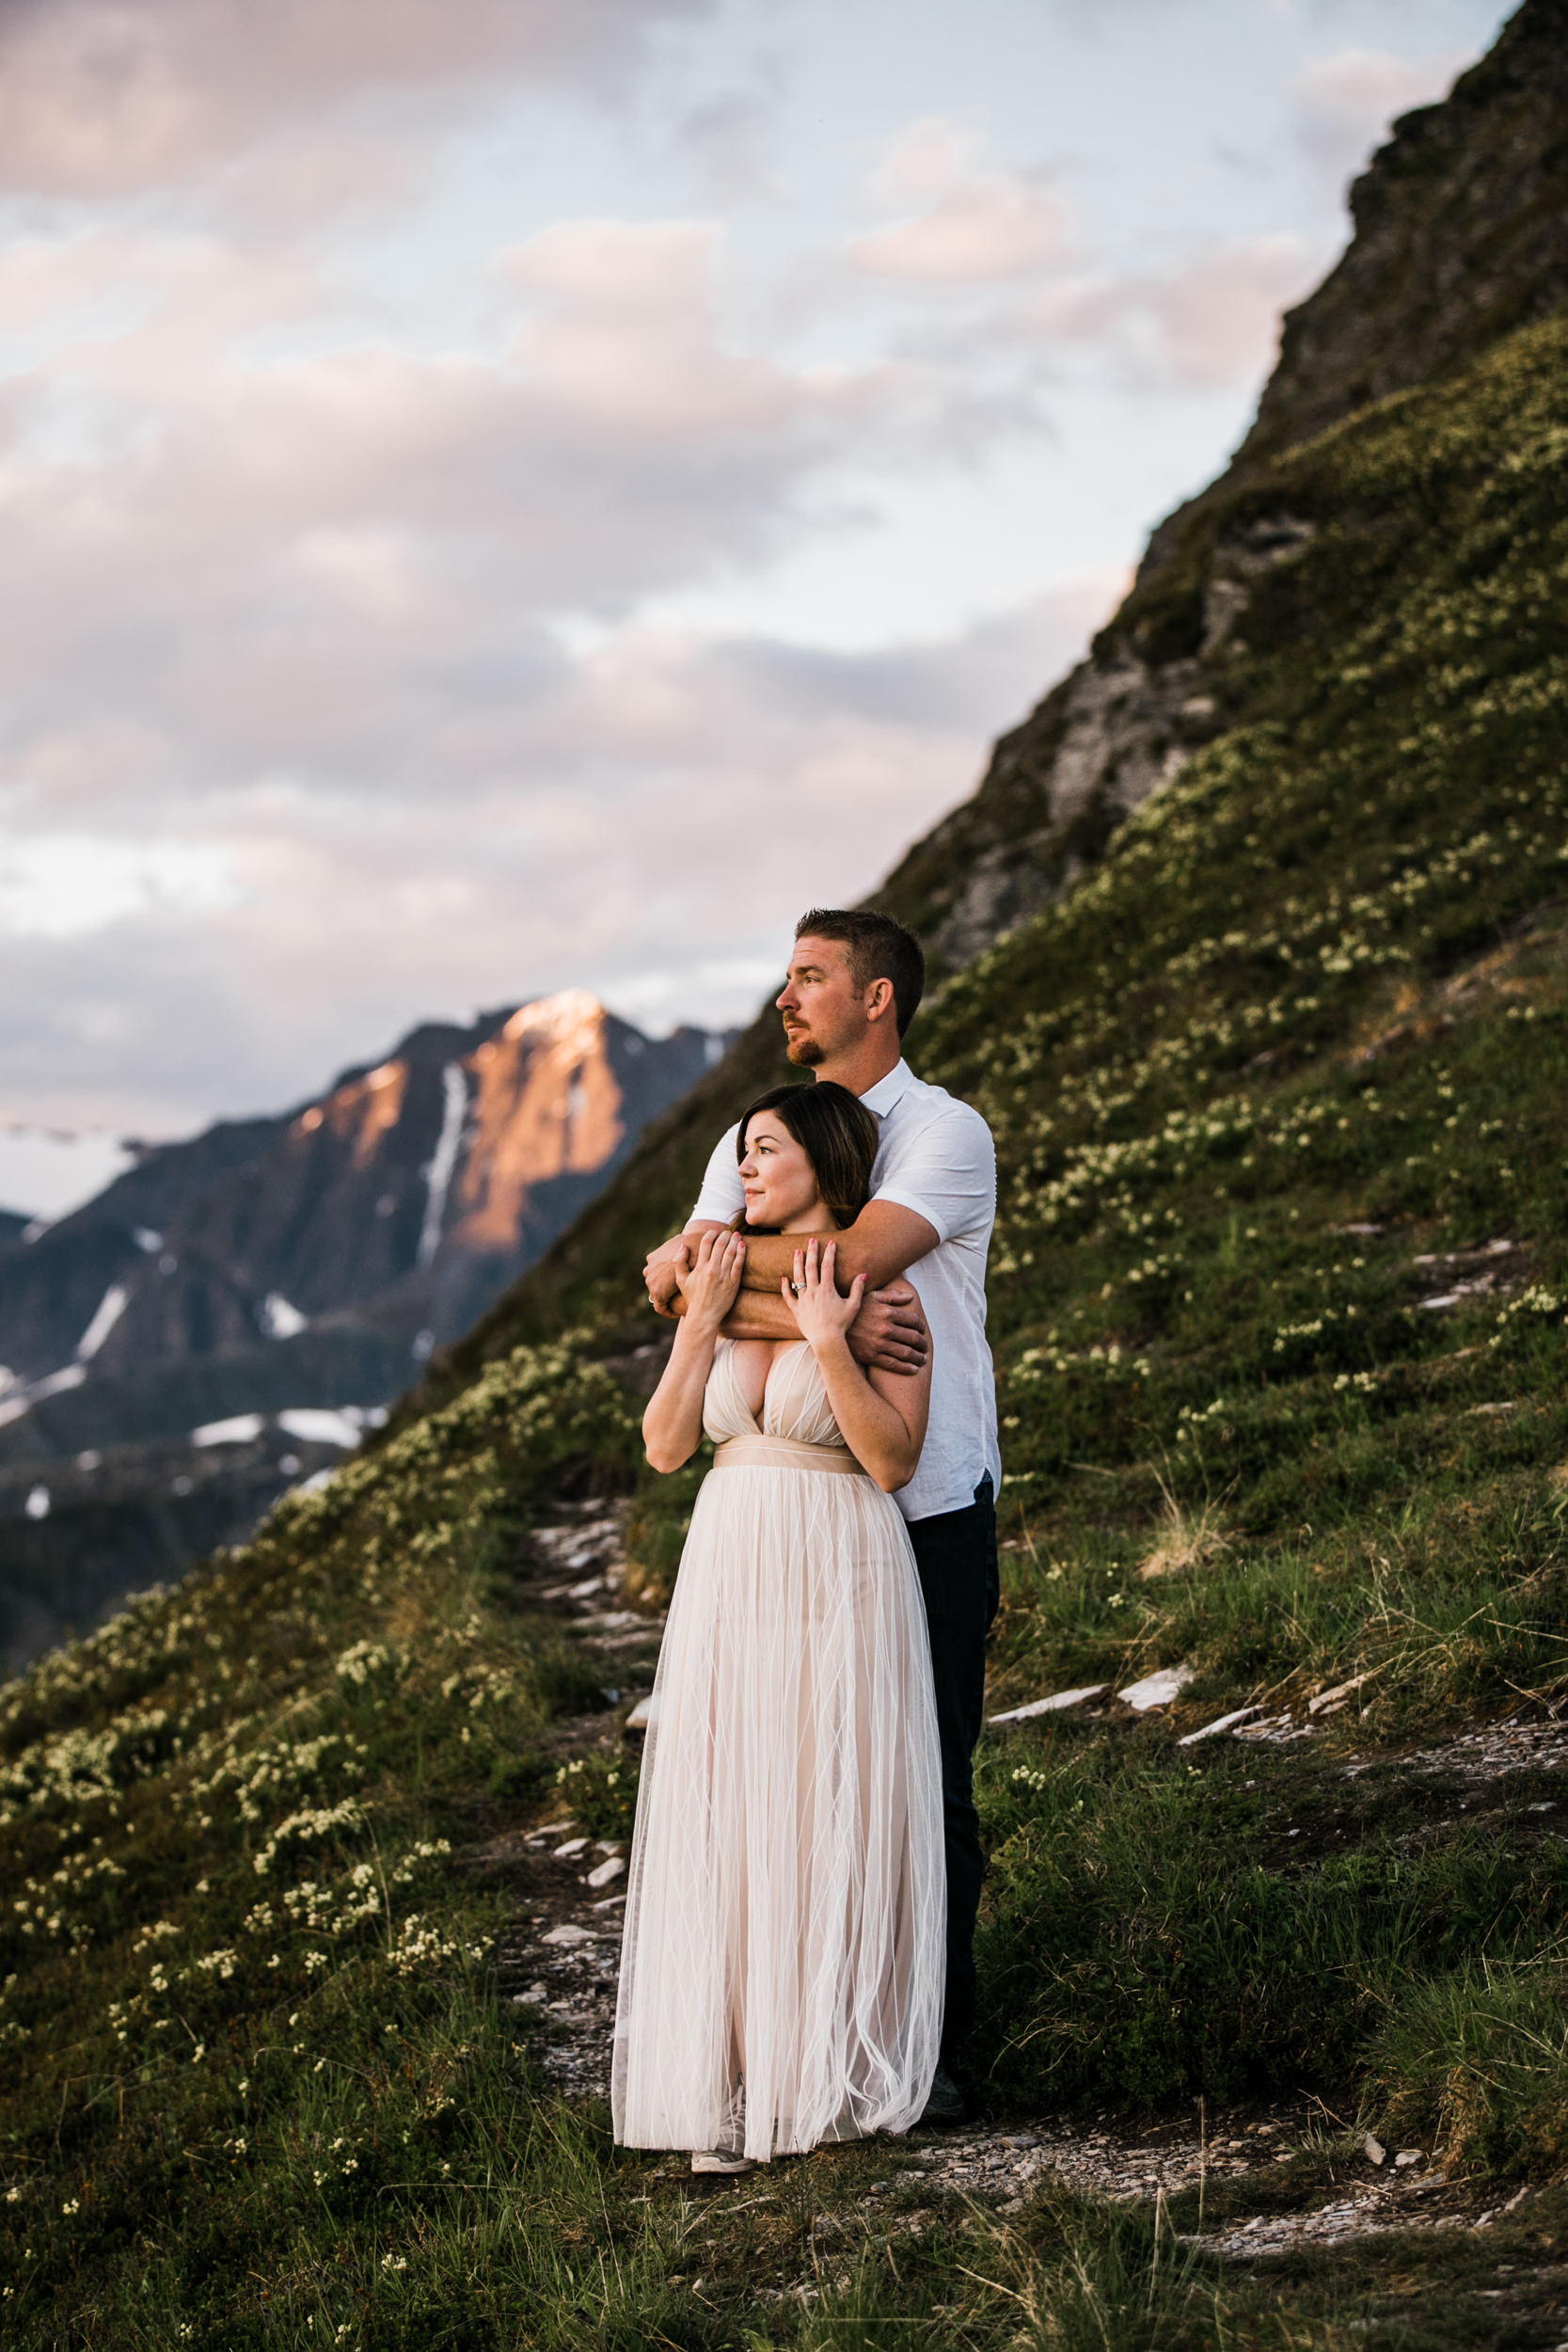 adventurous wedding anniversary session in alyeska, alaska | alaska elopement photographer | mountain resort elopement inspiration | the hearnes adventure photography | www.thehearnes.com